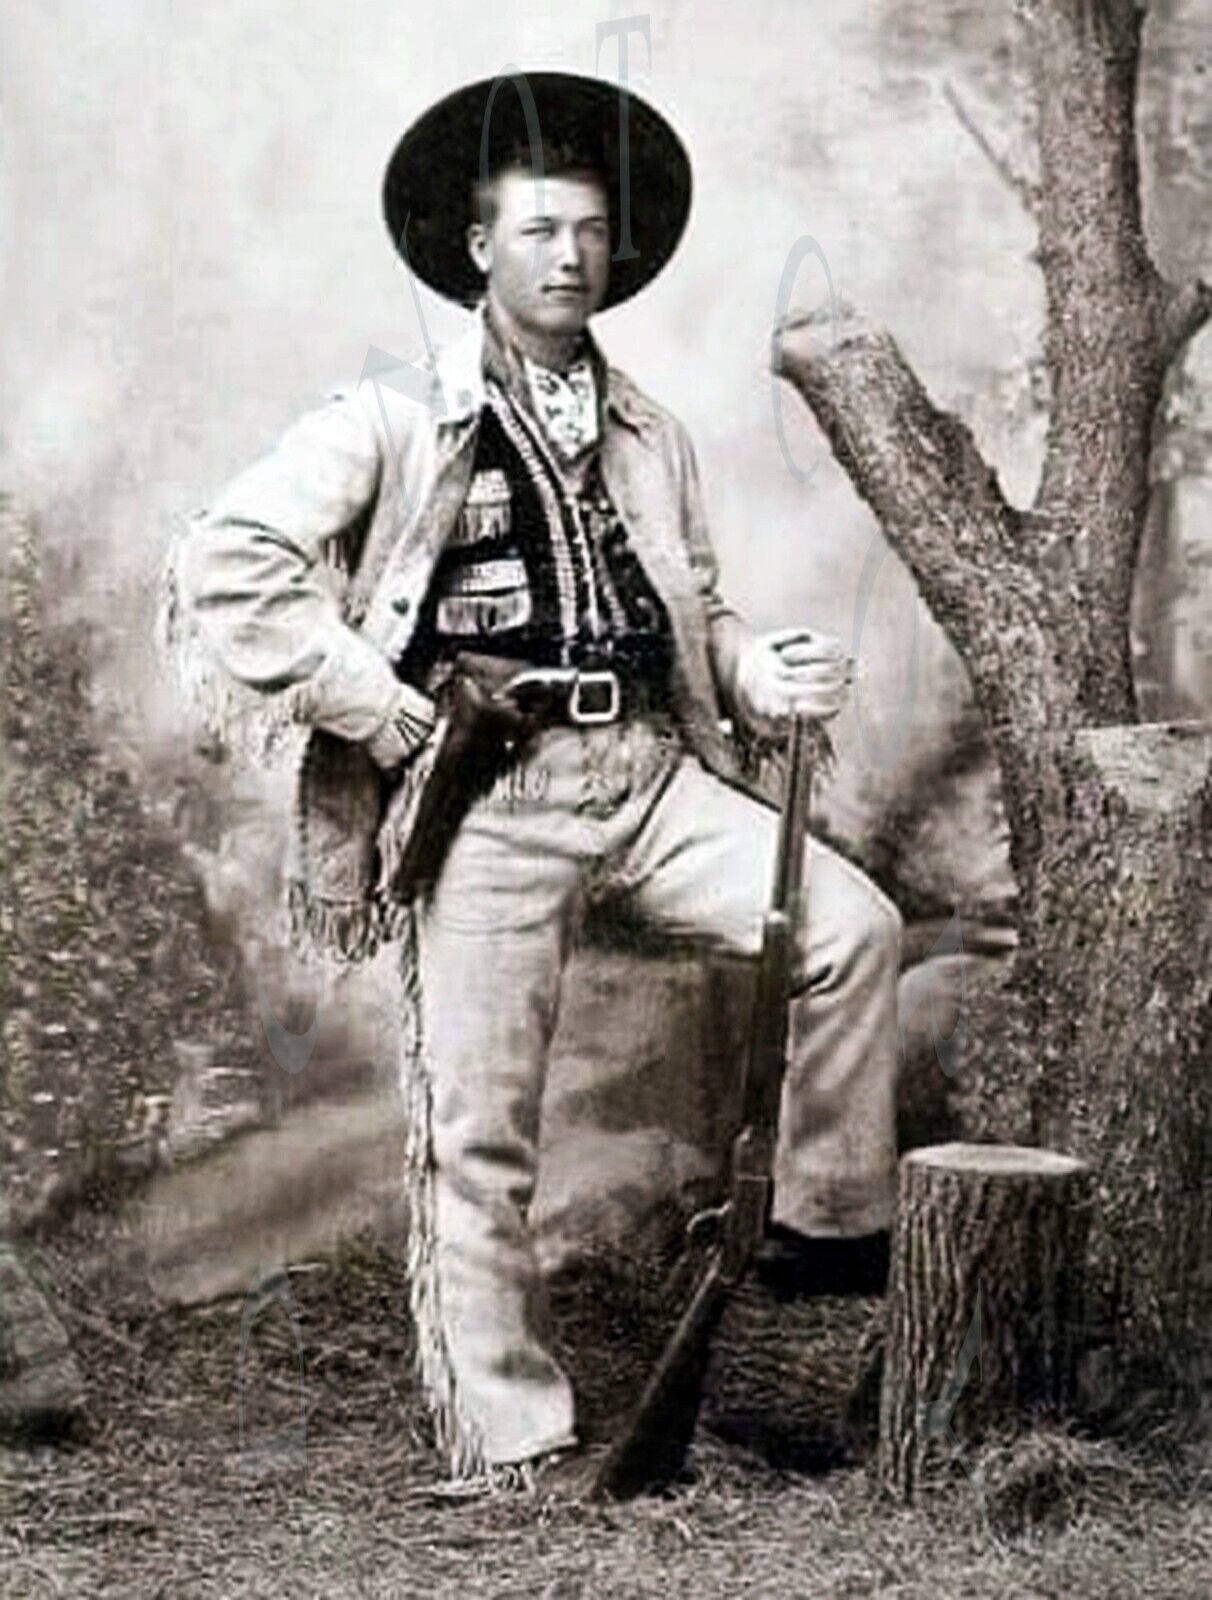 ANTIQUE REPRO 8X10 PHOTO PRINT WESTERN COWBOY COLT WINCHESTER 1873 RIFLE PISTOL